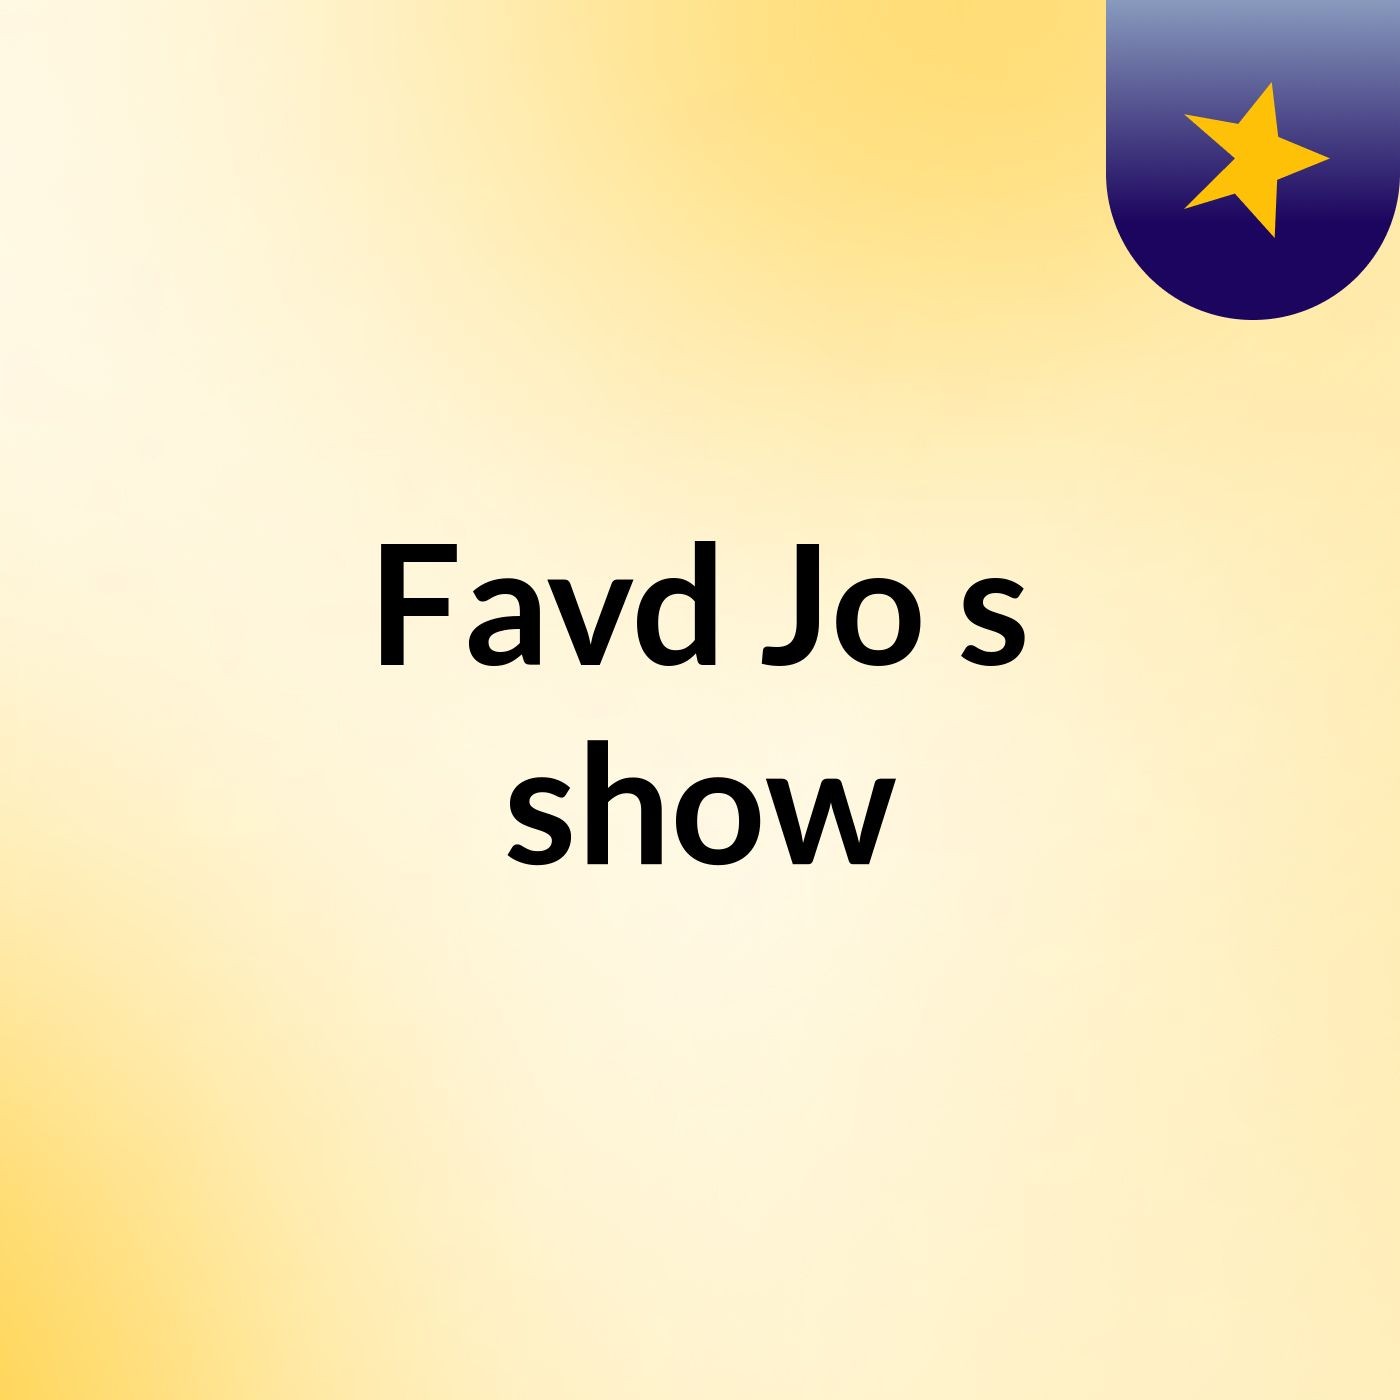 Favd Jo's show